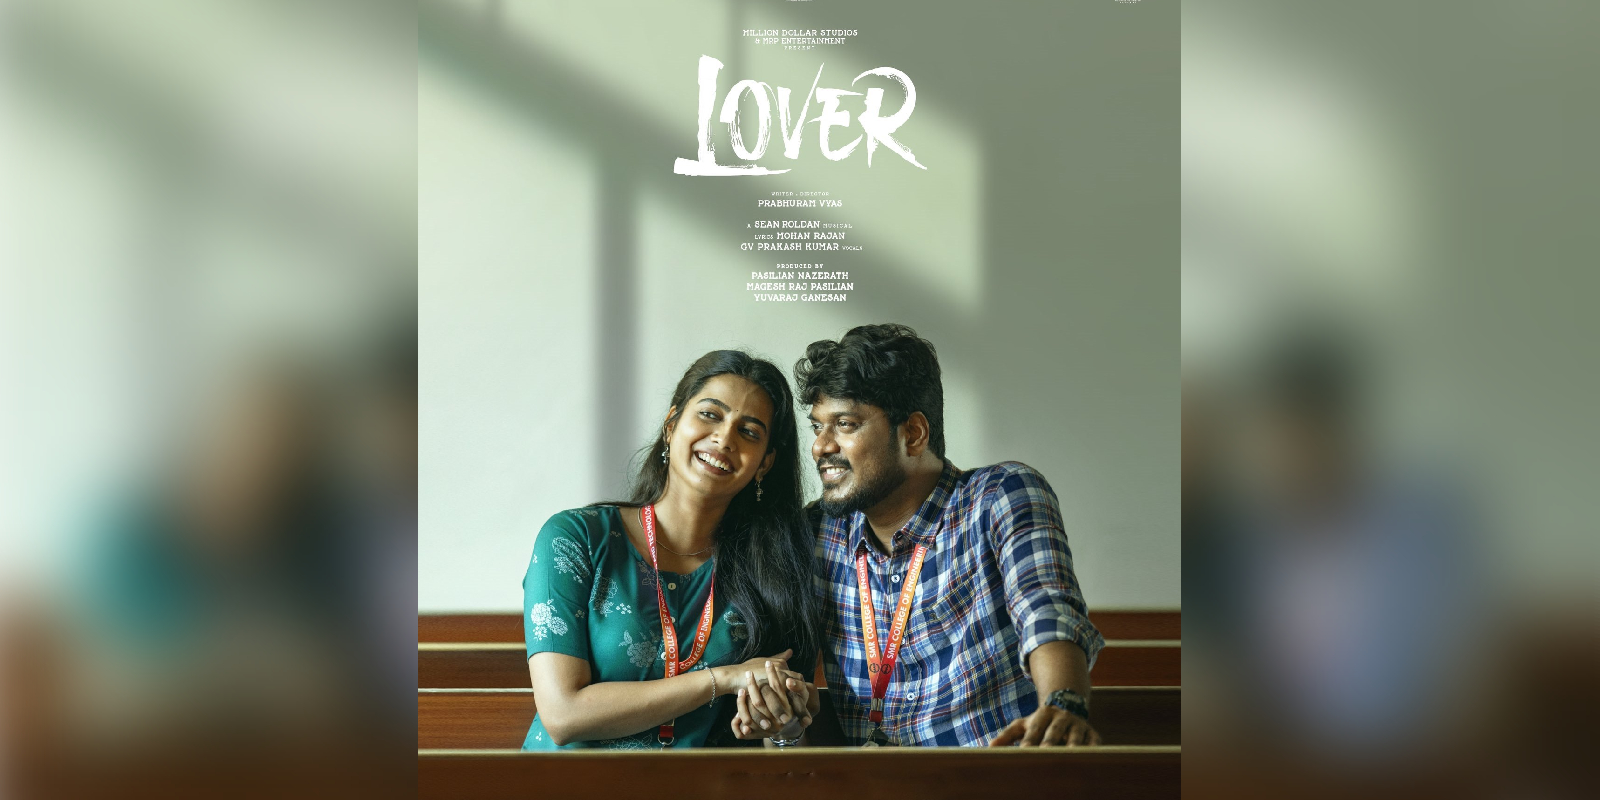 Lover is directed by Prabhuram Vyas